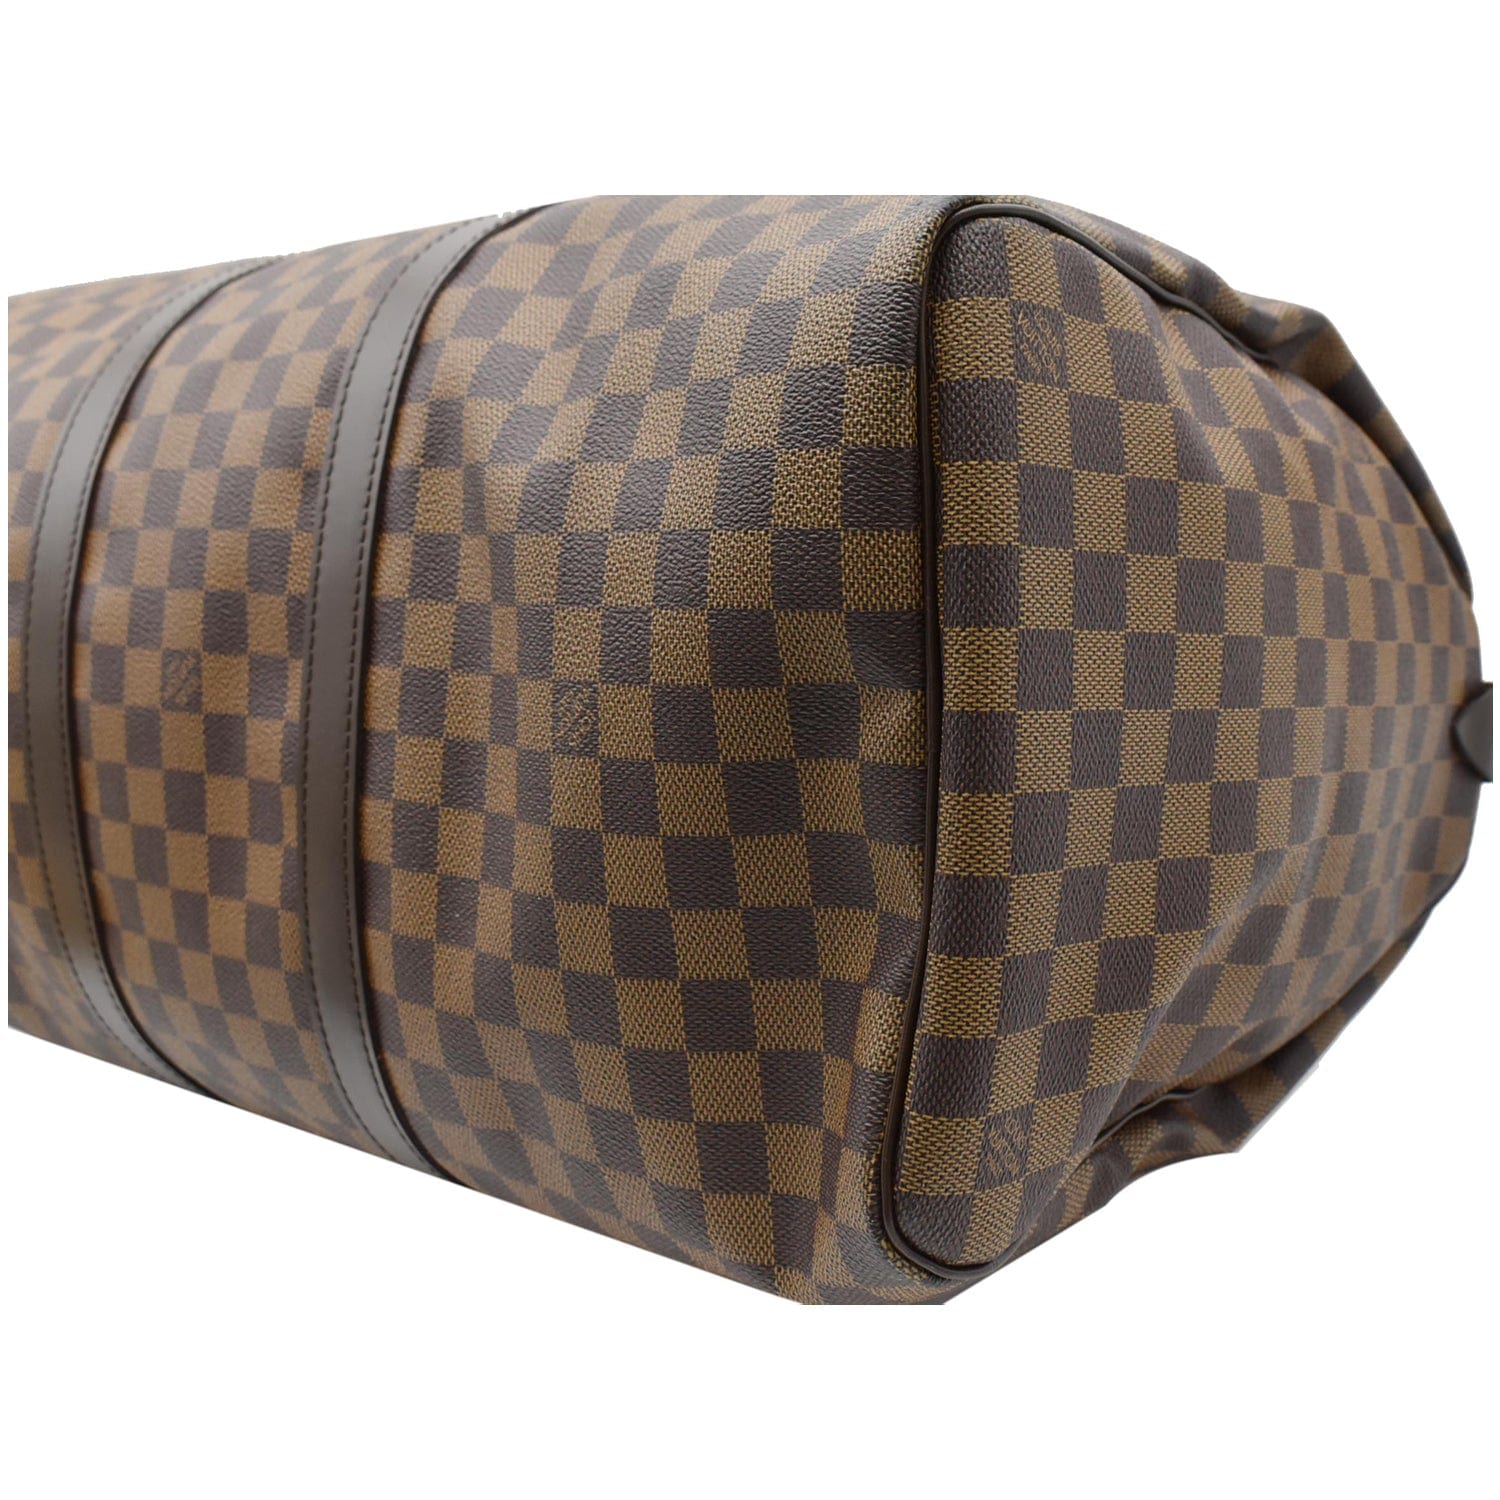 chromedubai on Instagram: This bag 🫠 Louis Vuitton Keepall 50B